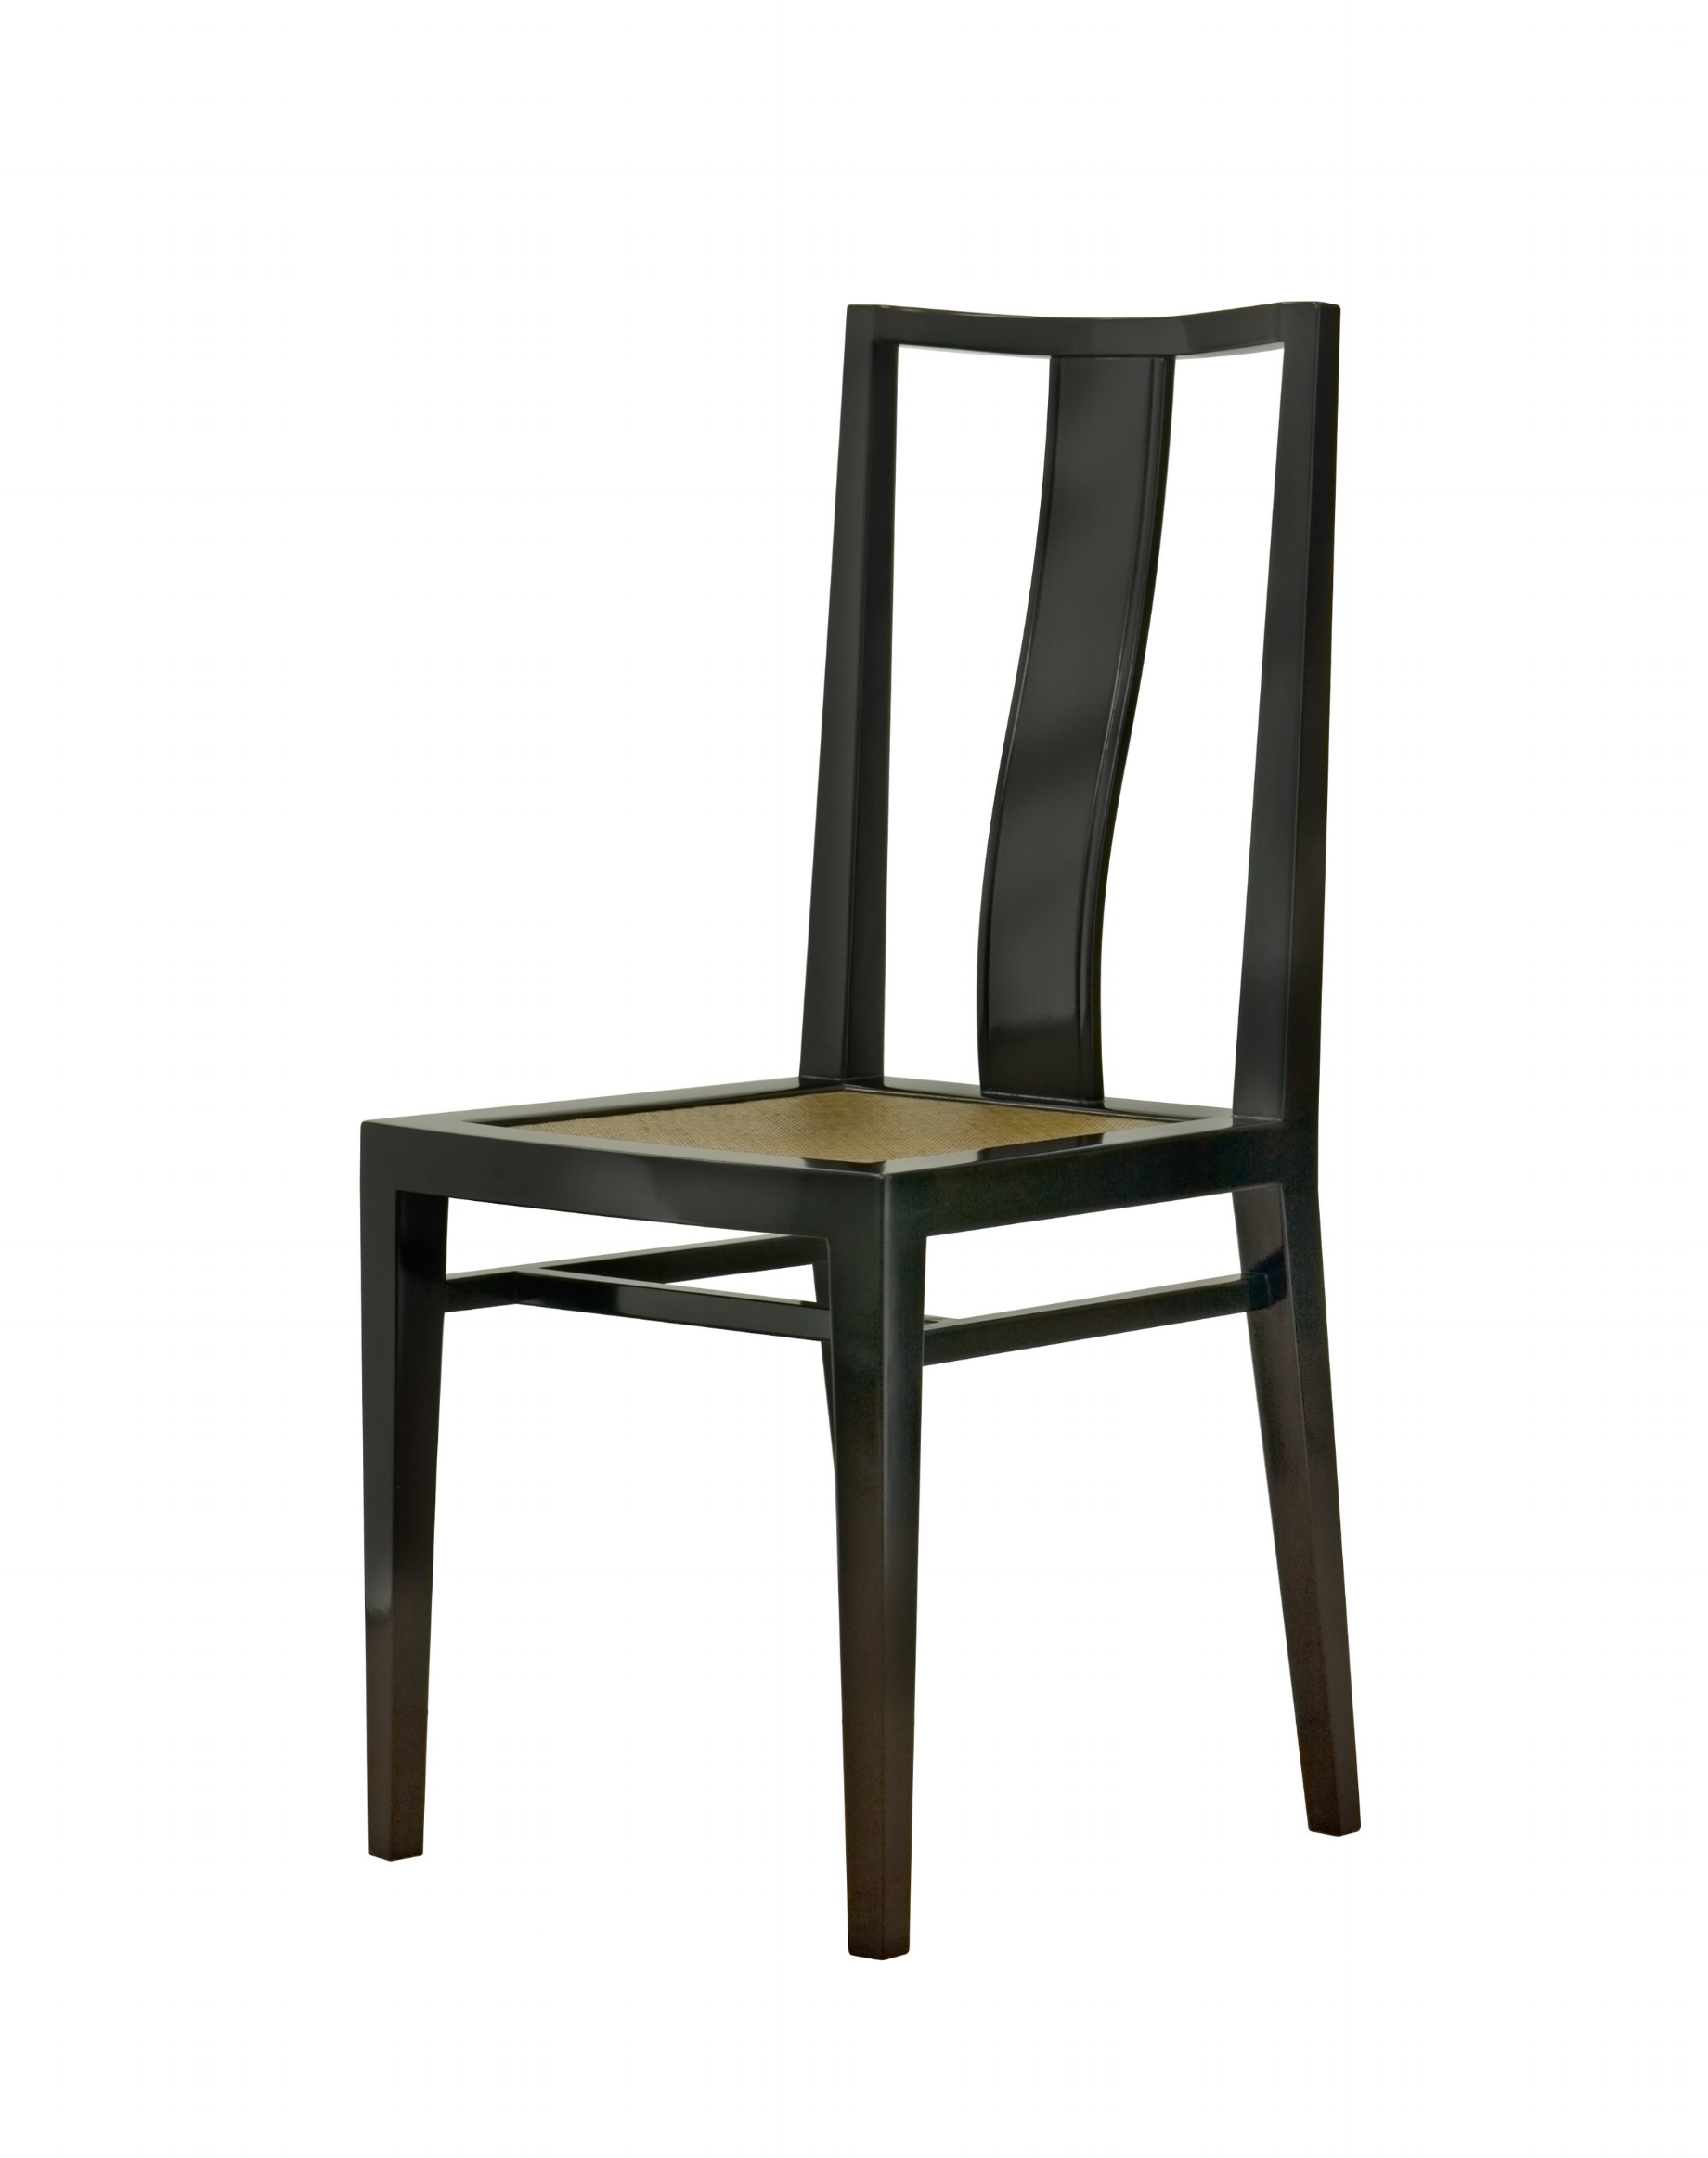 ....Art deco style furniture : Side chair..艺术装饰风格家具： 靠背椅....